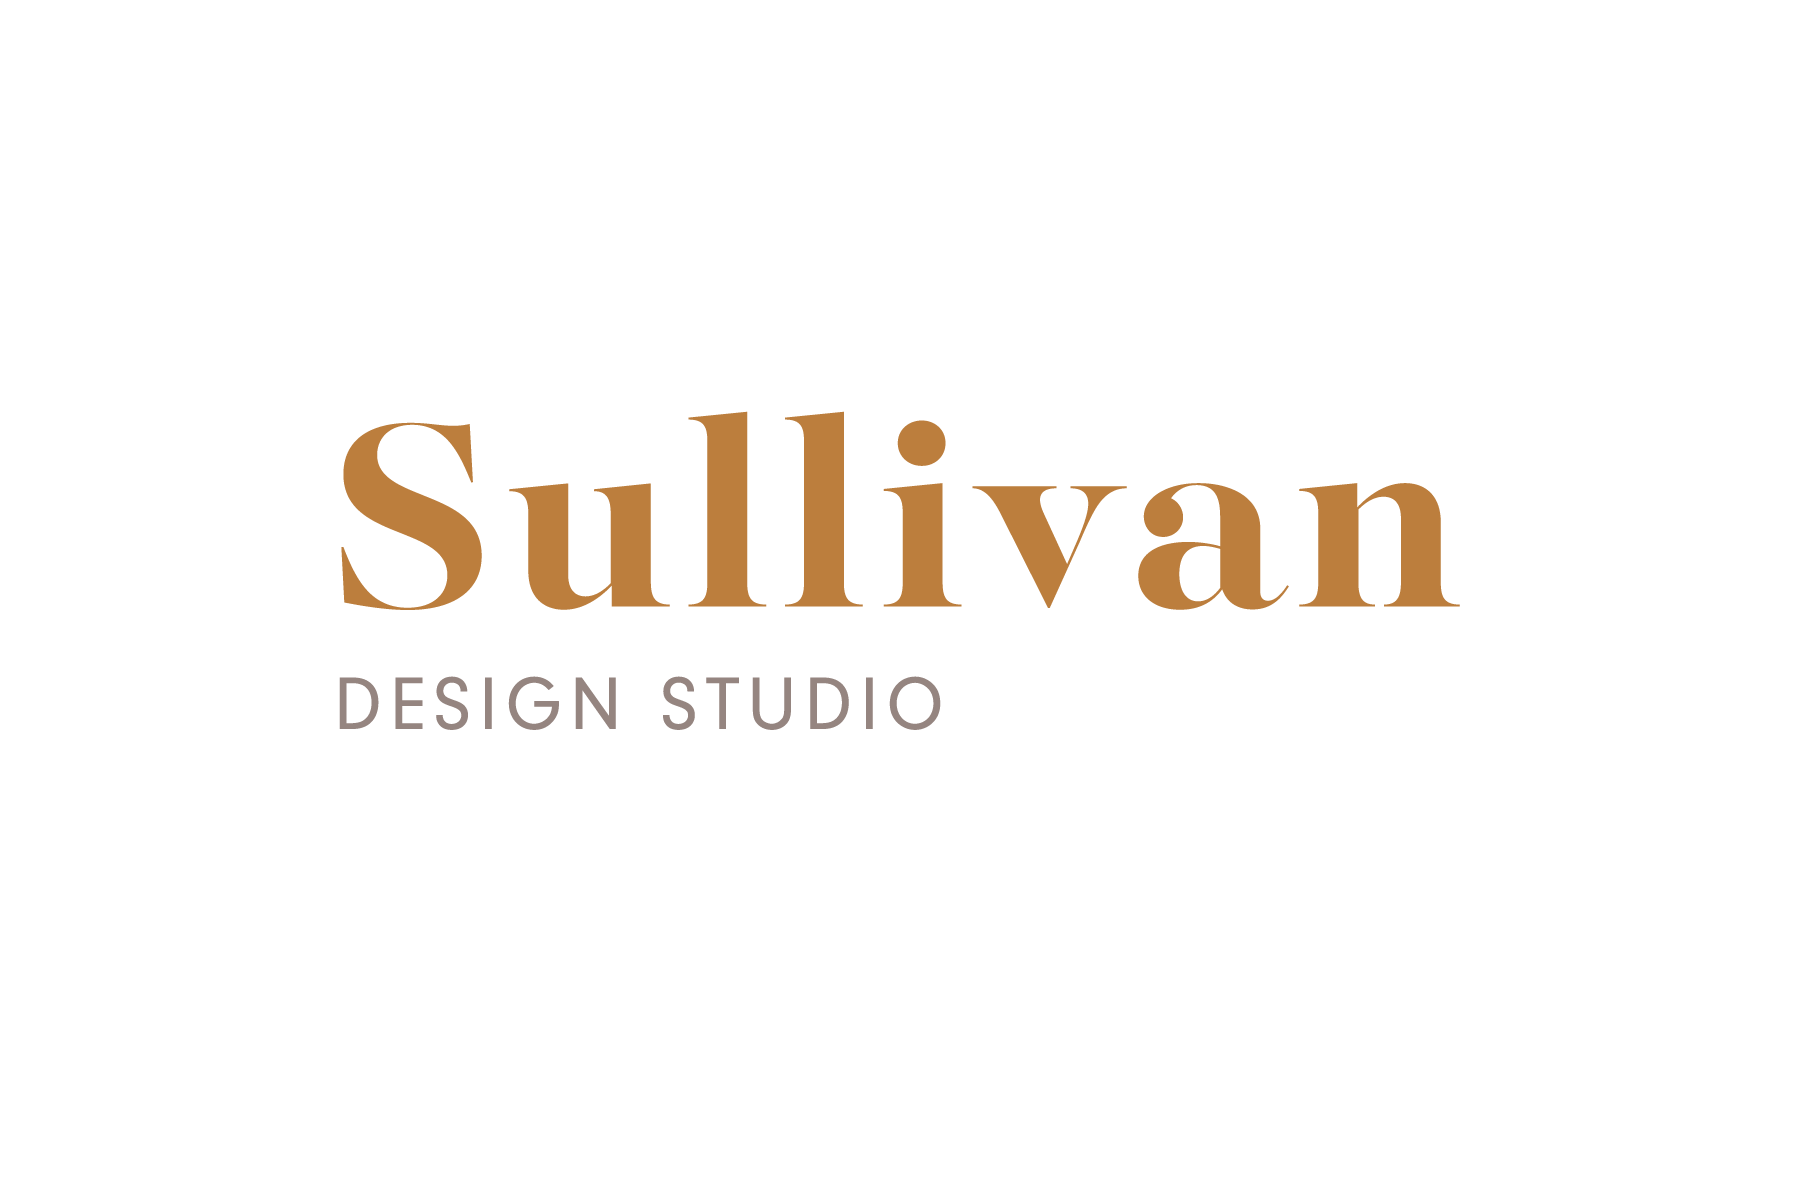 Sullivan Design Studio - Personify